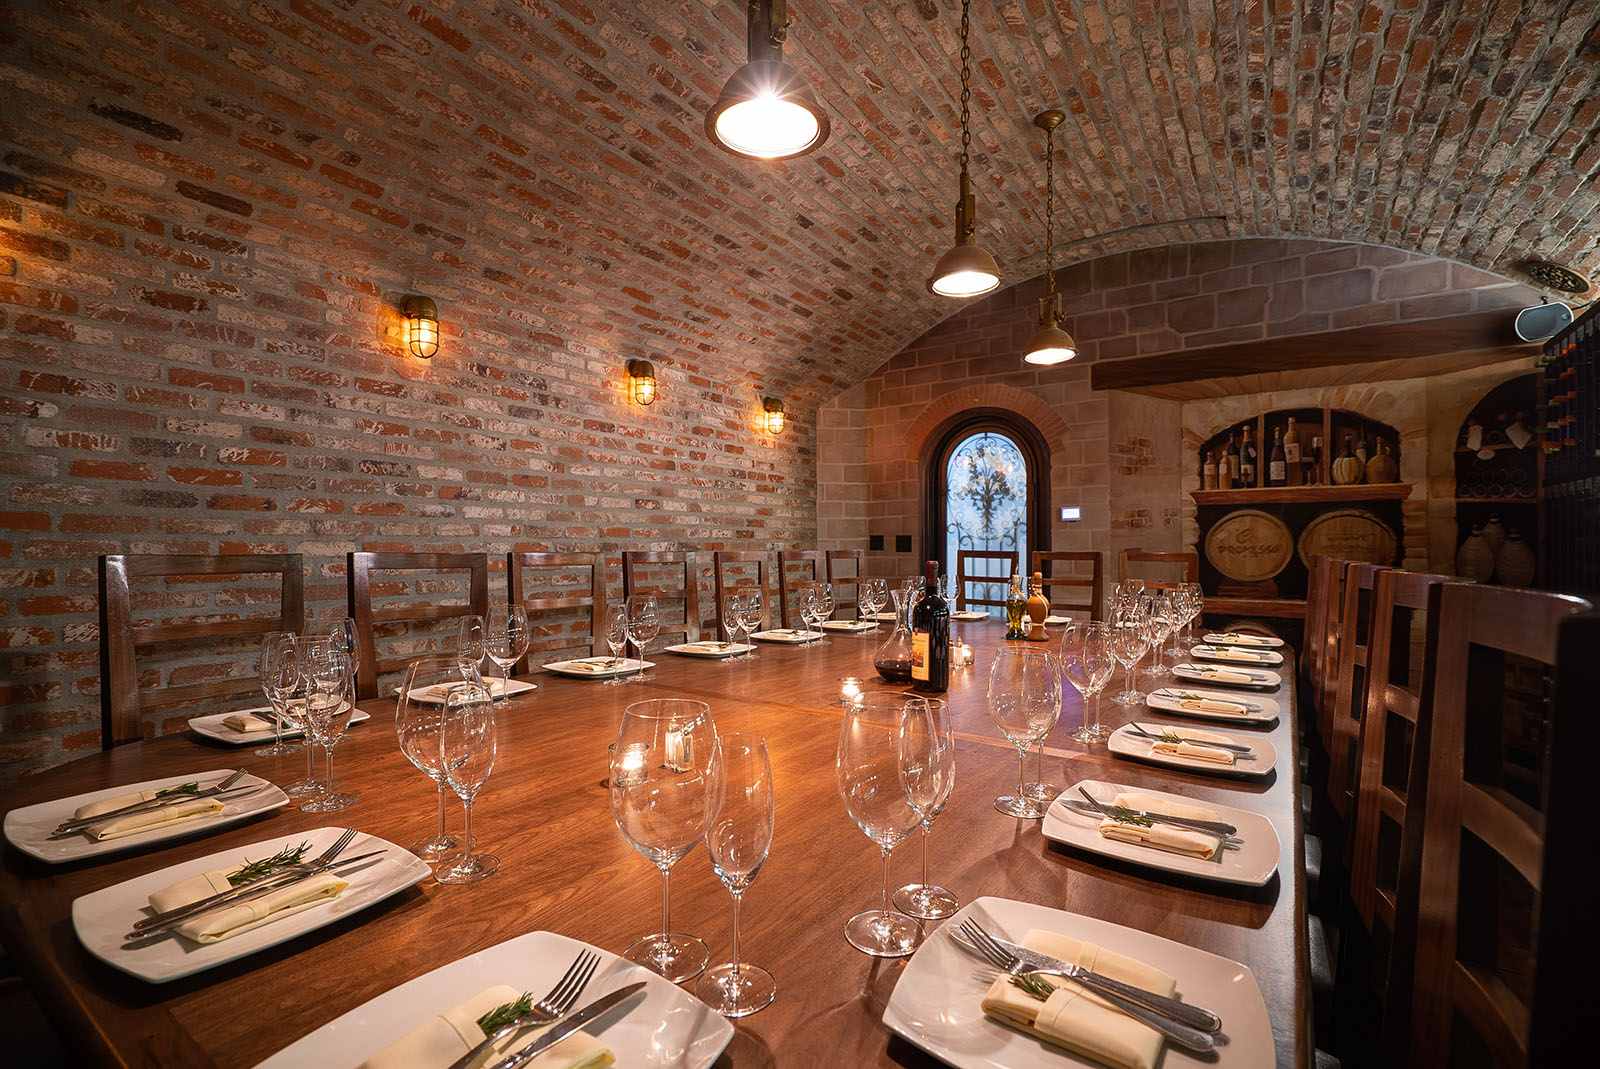 Wine cellar dining room - Della Terra Restaurant - Event Venue Rental - Tagvenue.com